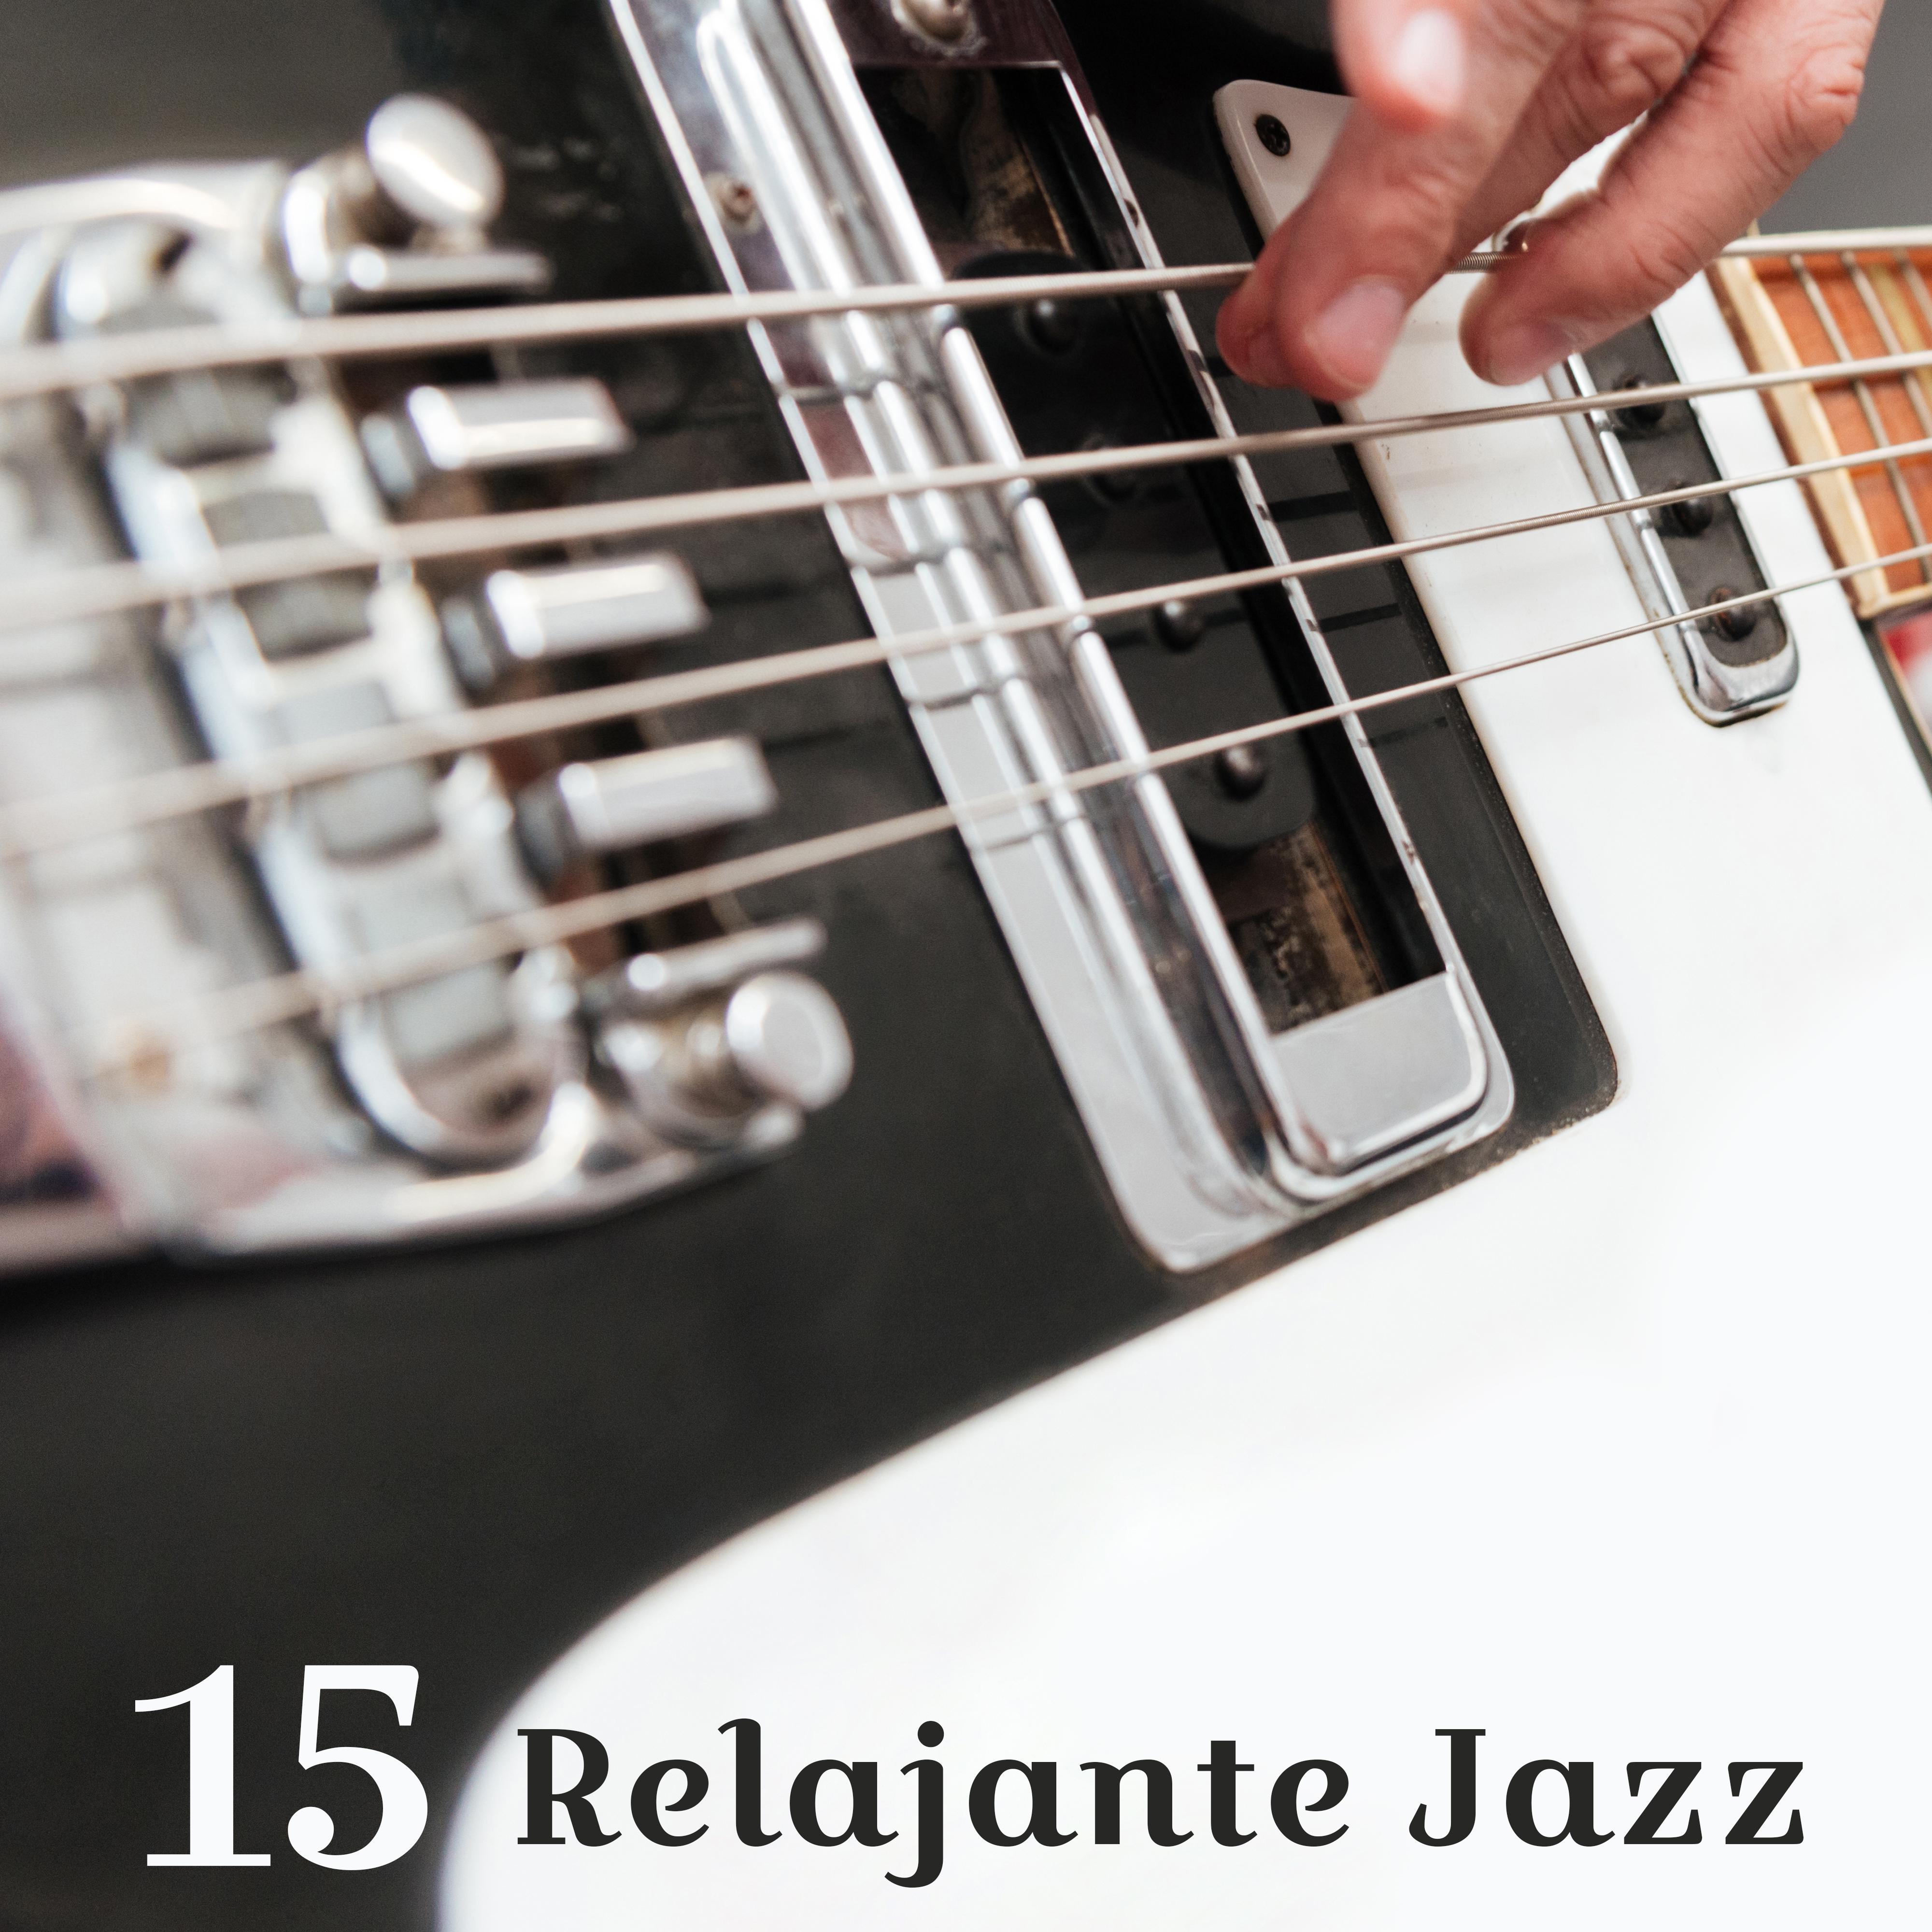 15 Relajante Jazz